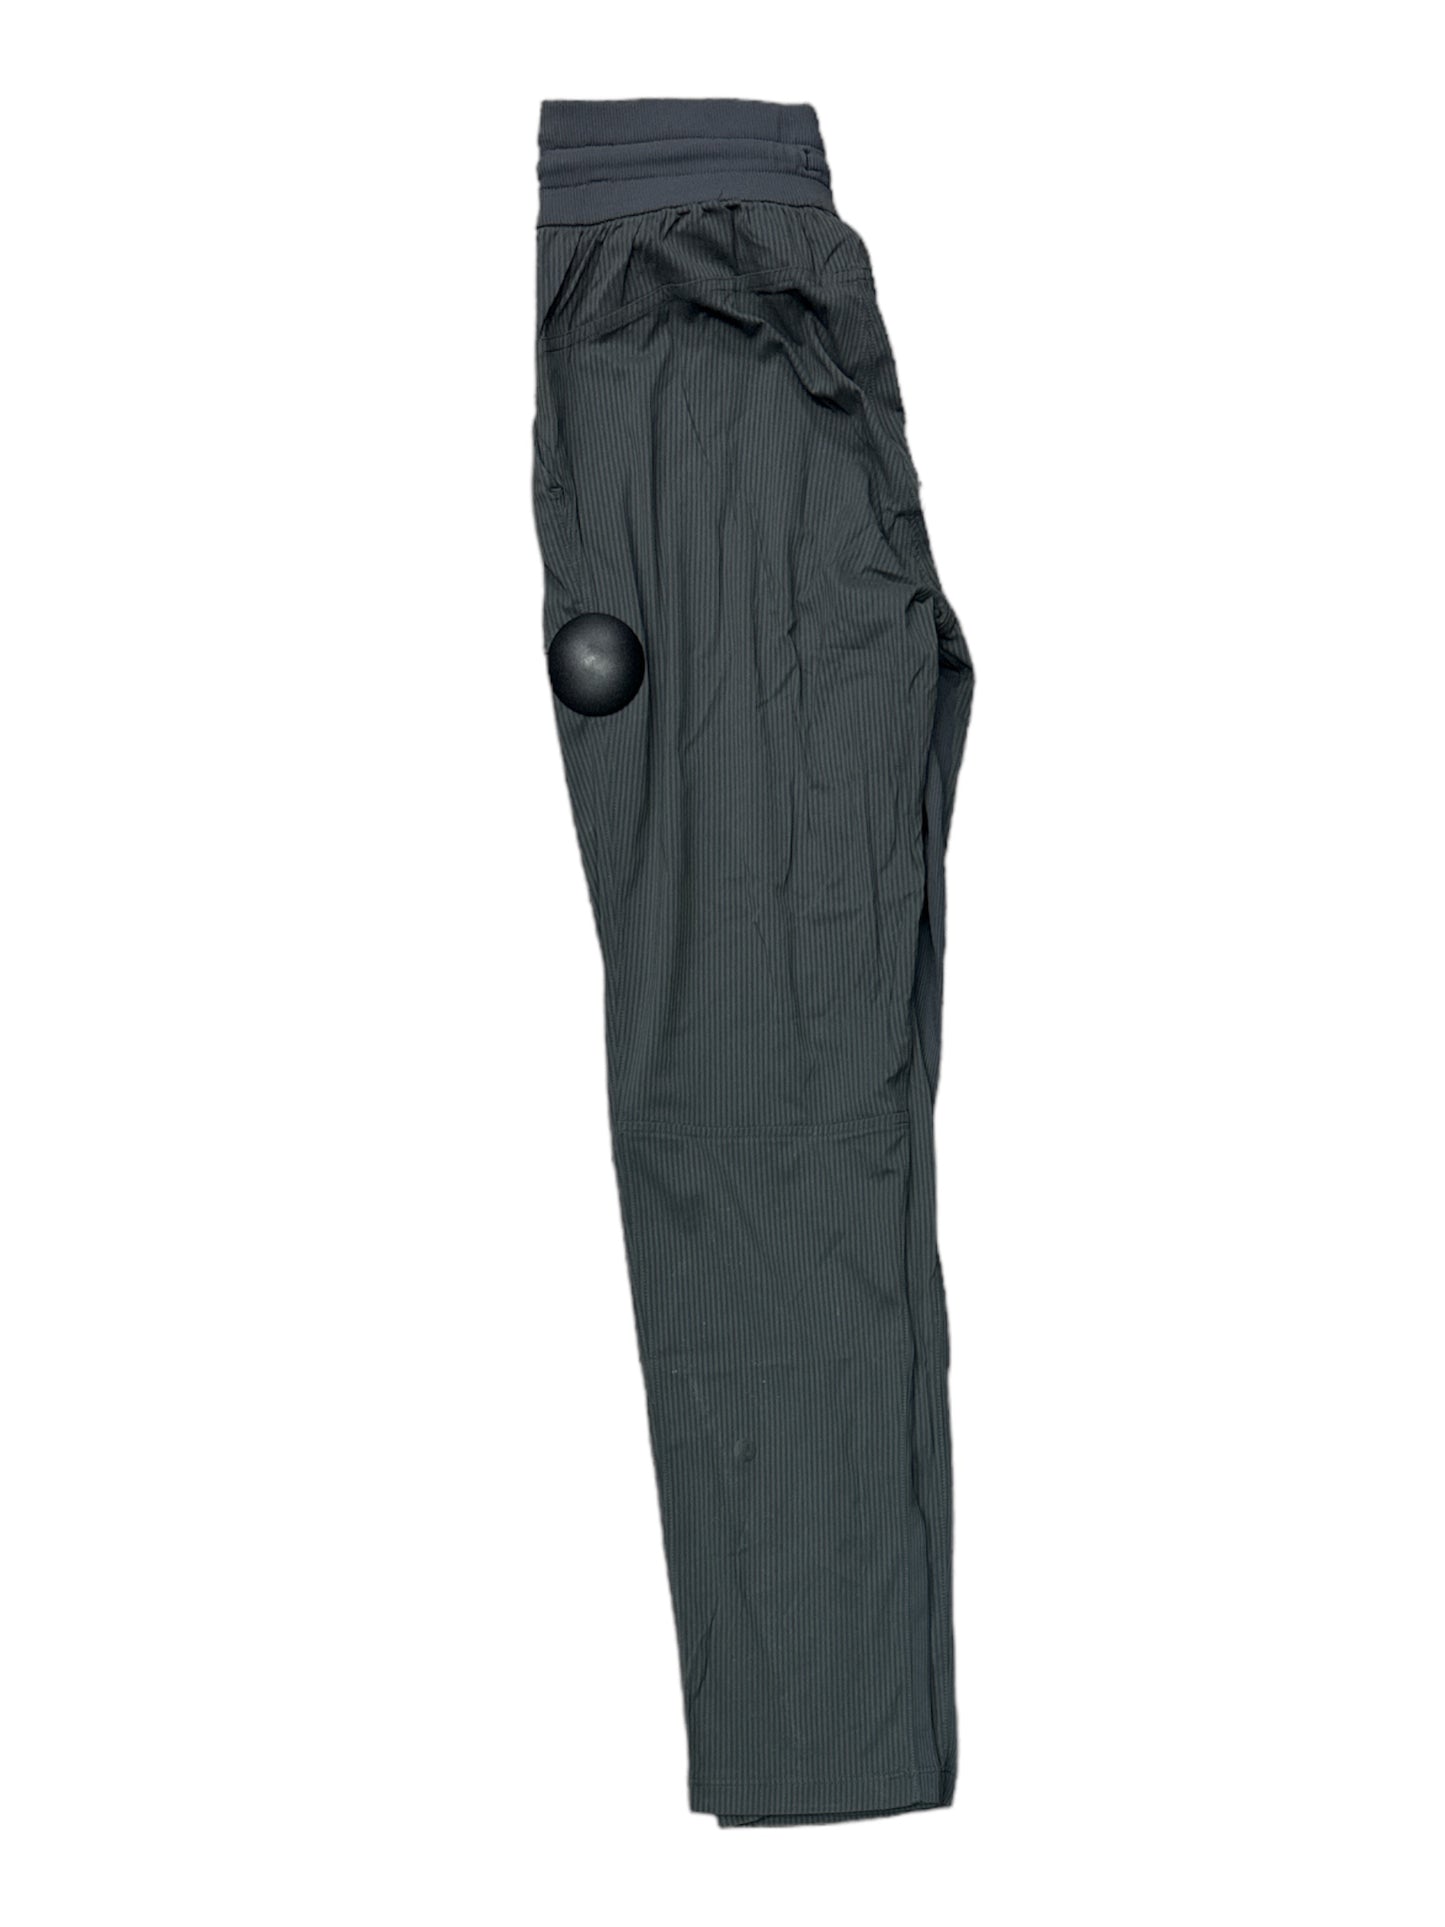 Athletic Pants By Lululemon  Size: Xs